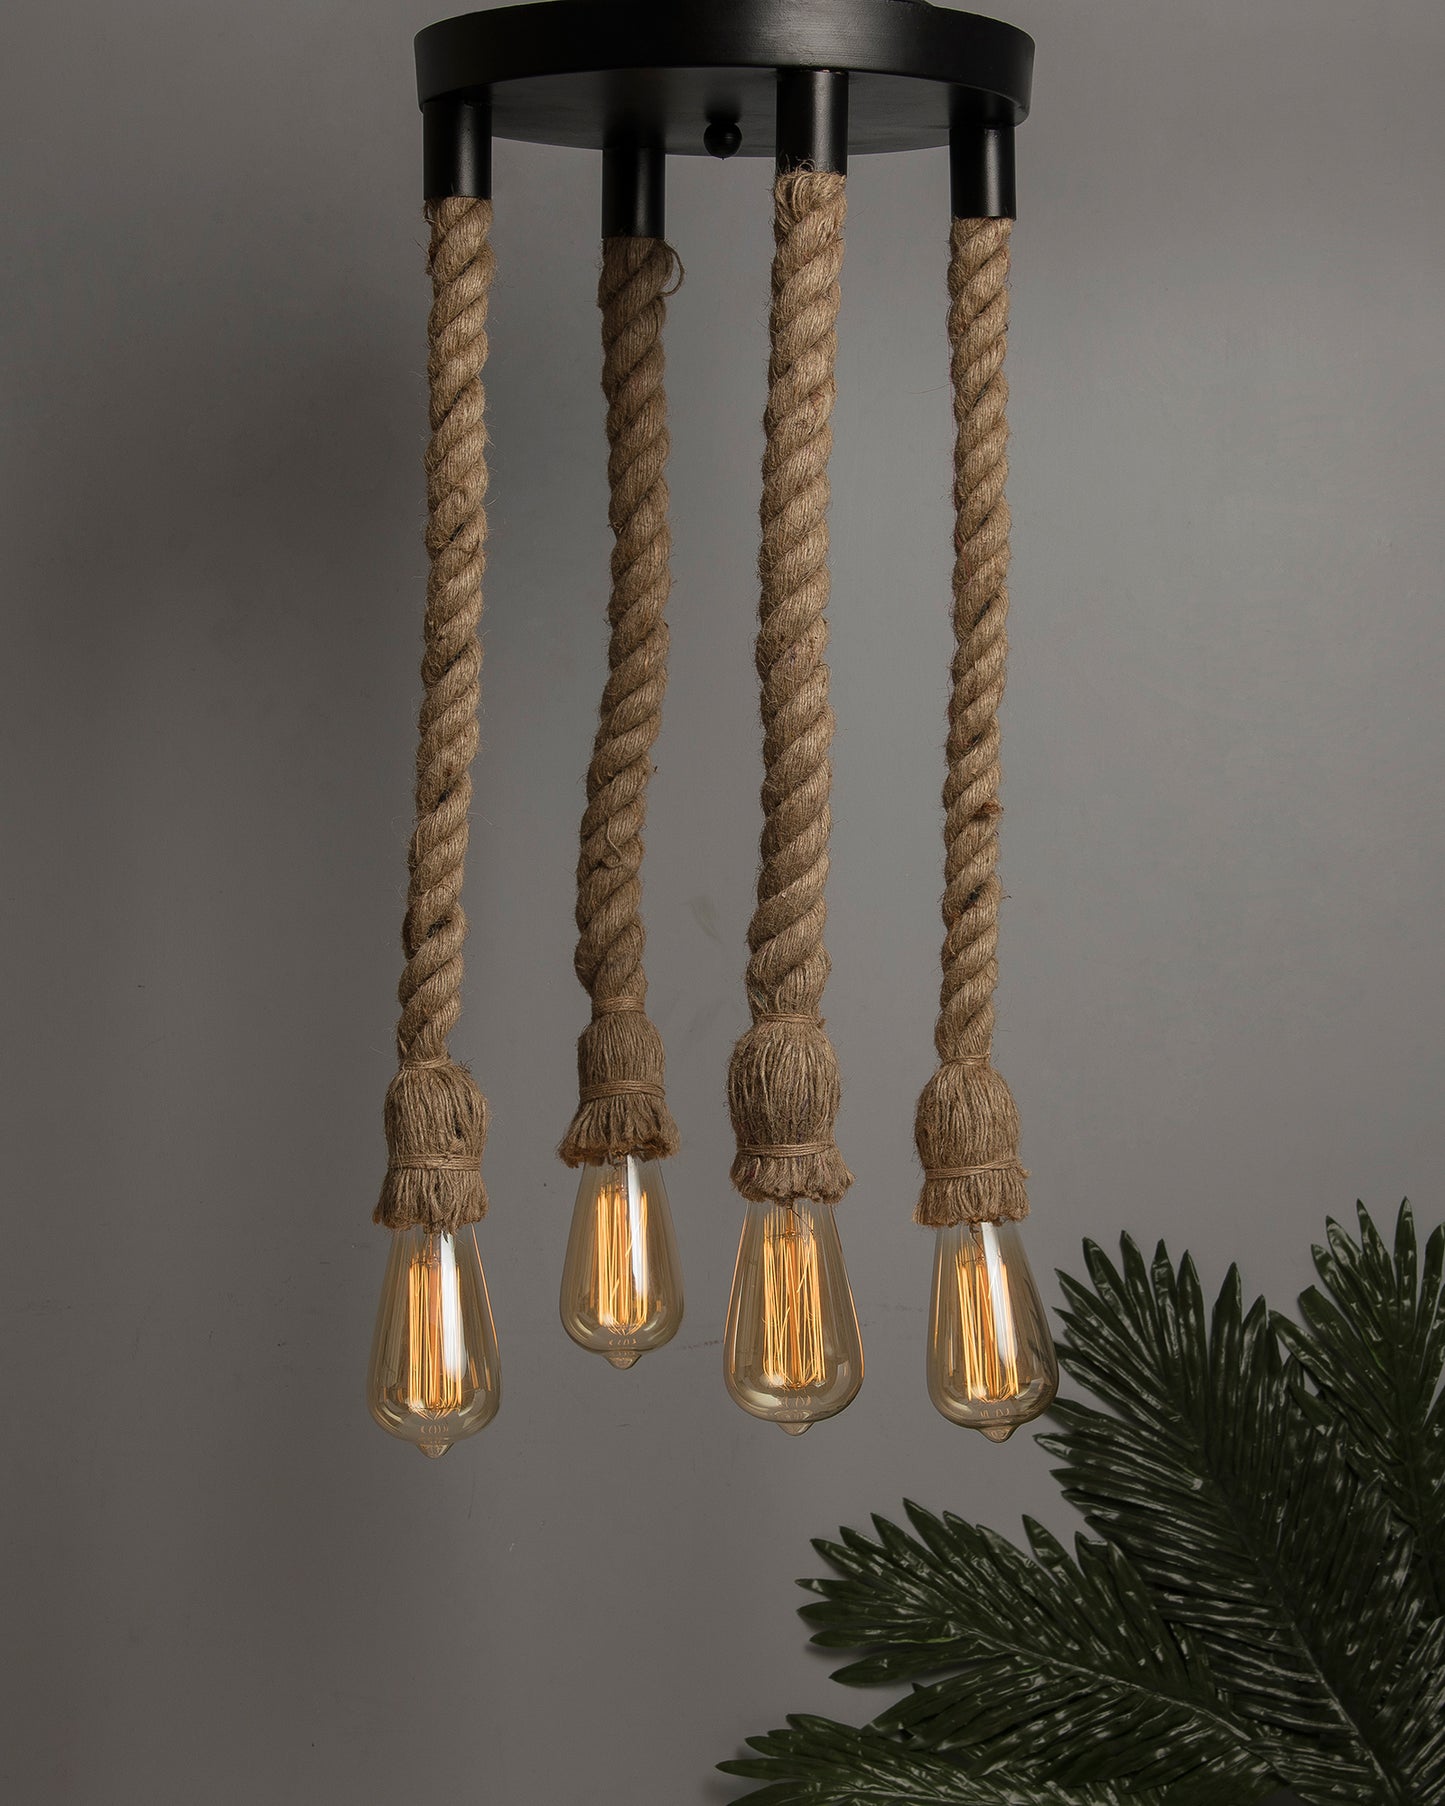 Hanging Rustic Rope chandelier, hanging ceiling light for dining room,bar,restraunt, cafe